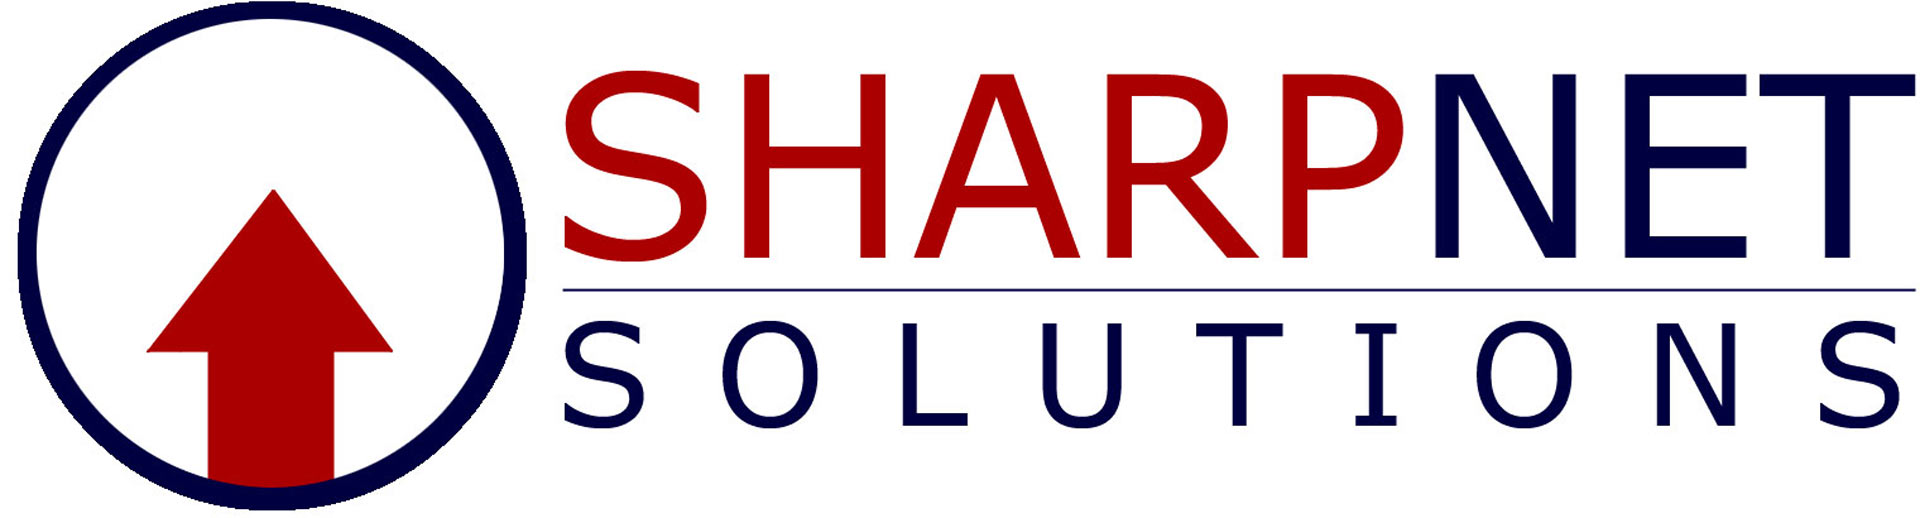 Top Online Marketing Company Logo: SharpNet